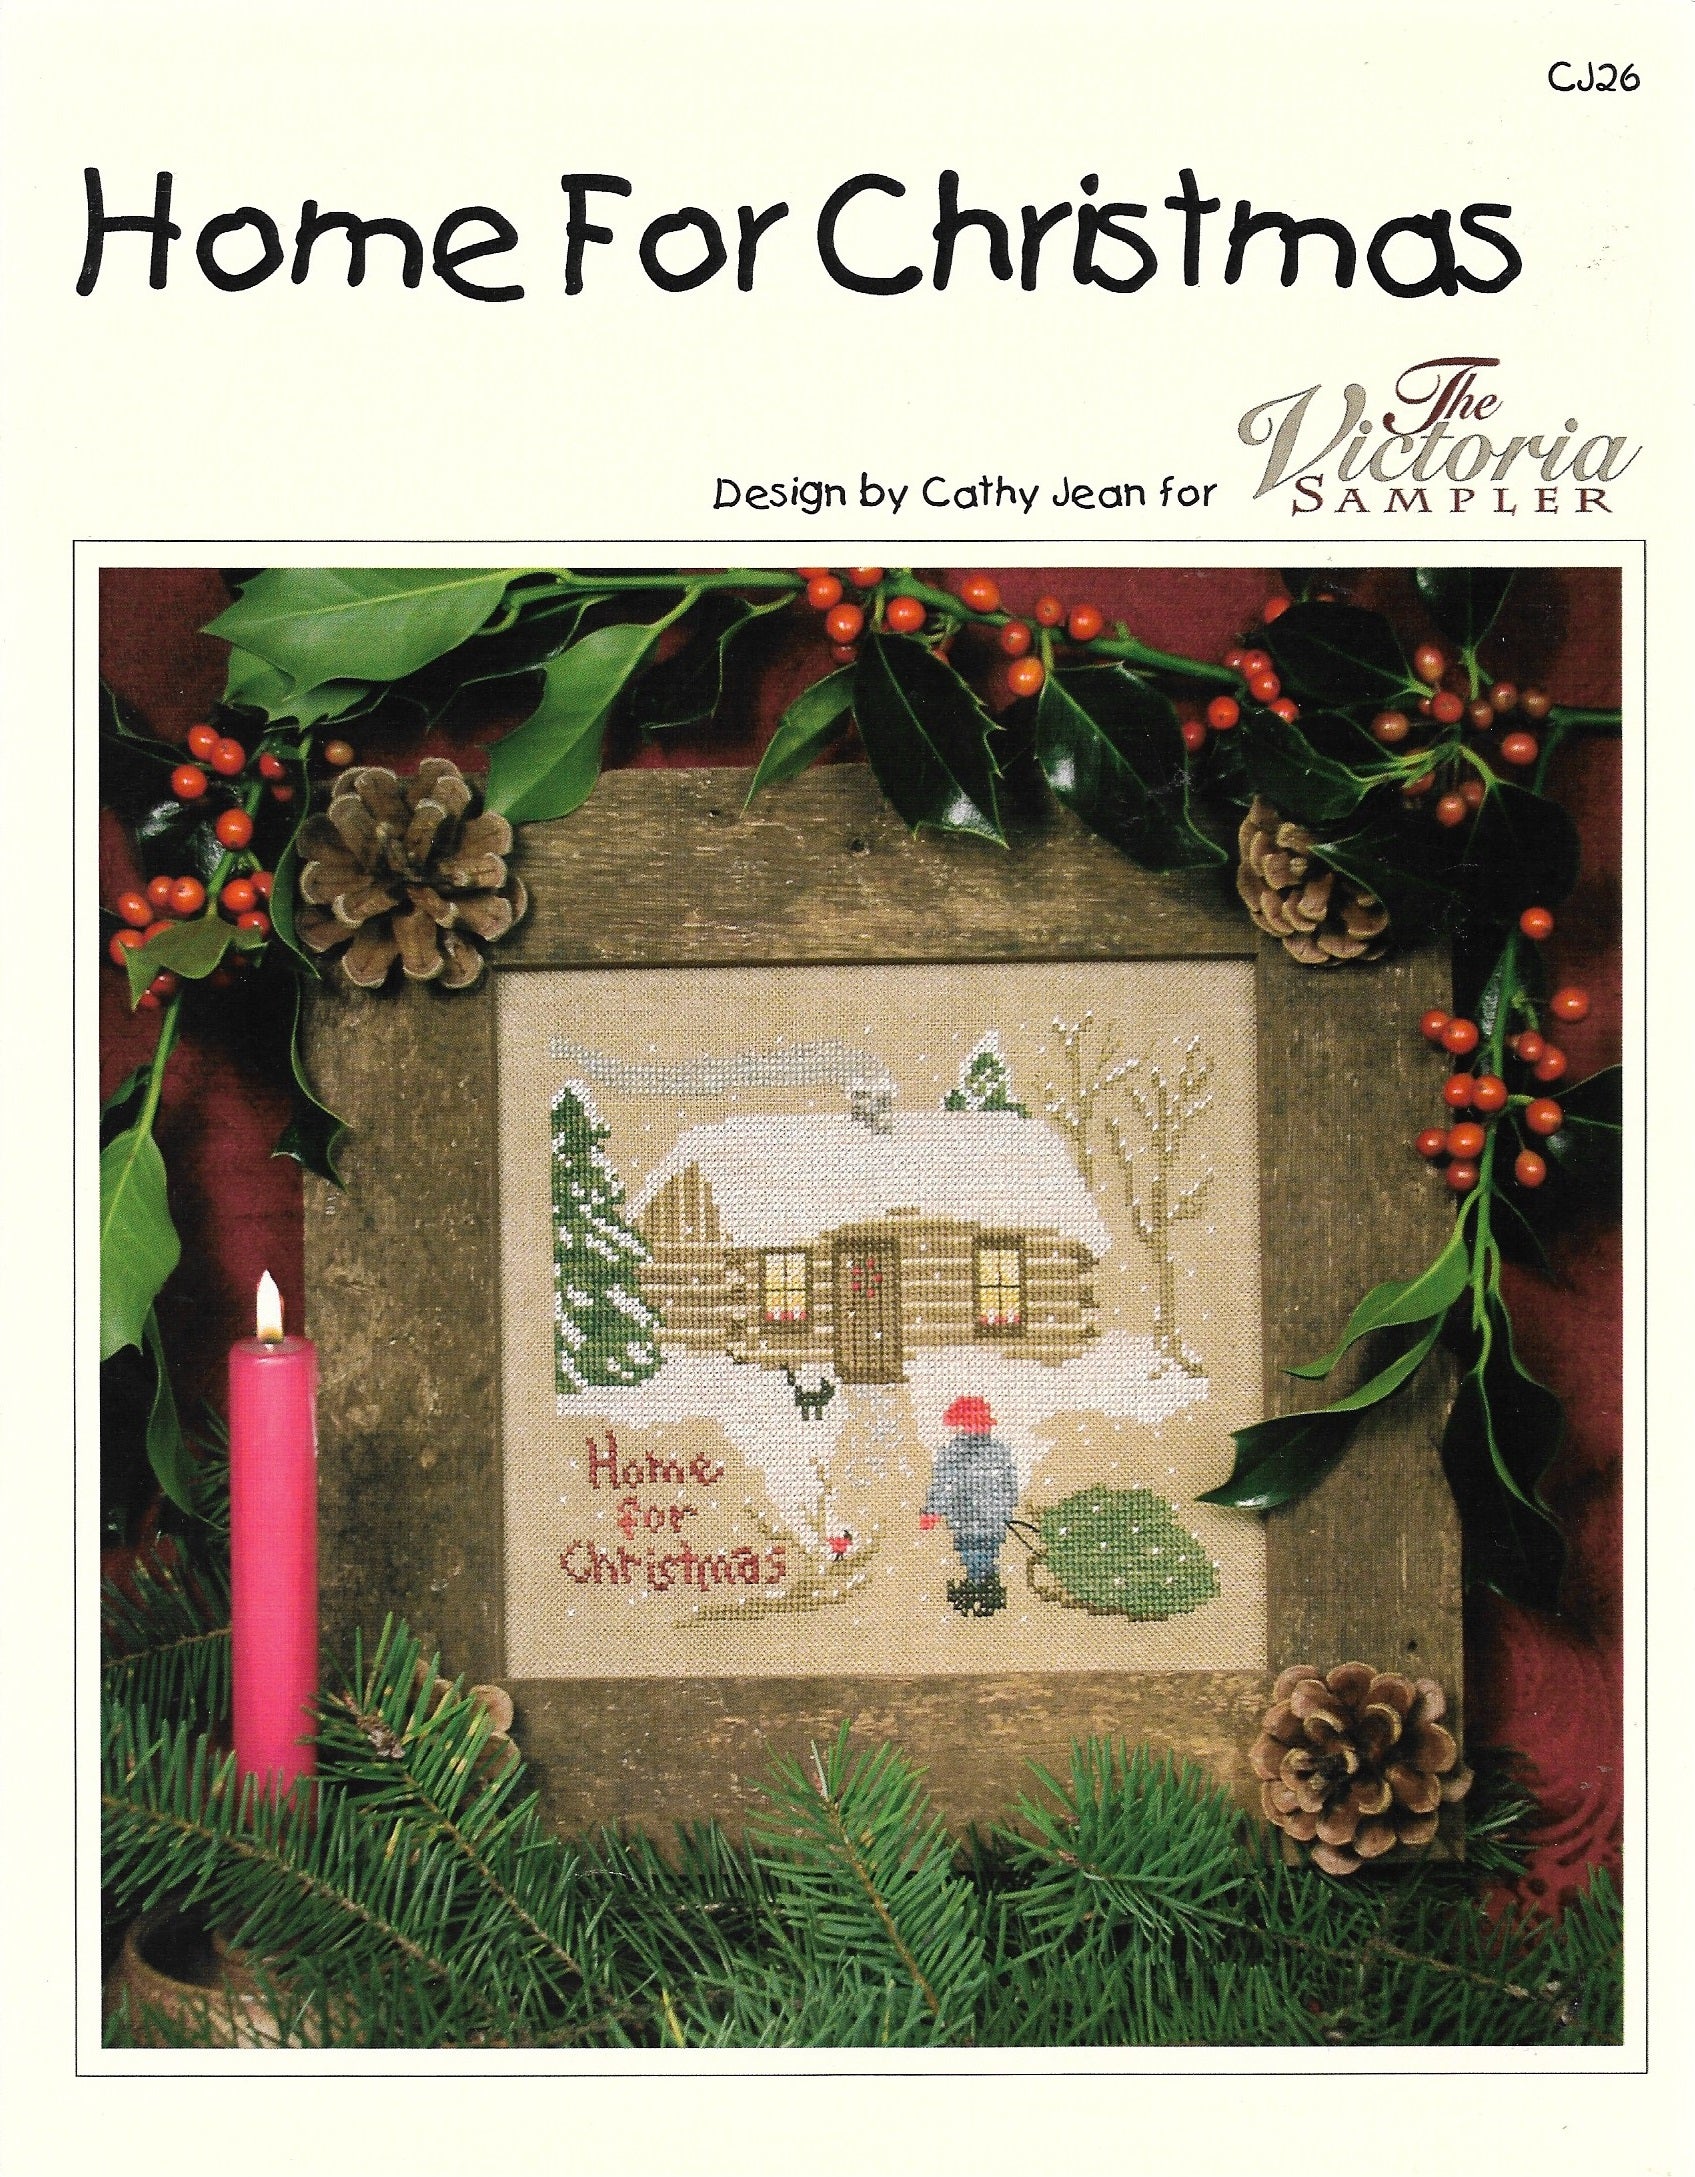 Victoria Sampler Home For Christmas CJ26 bird cross stitch pattern